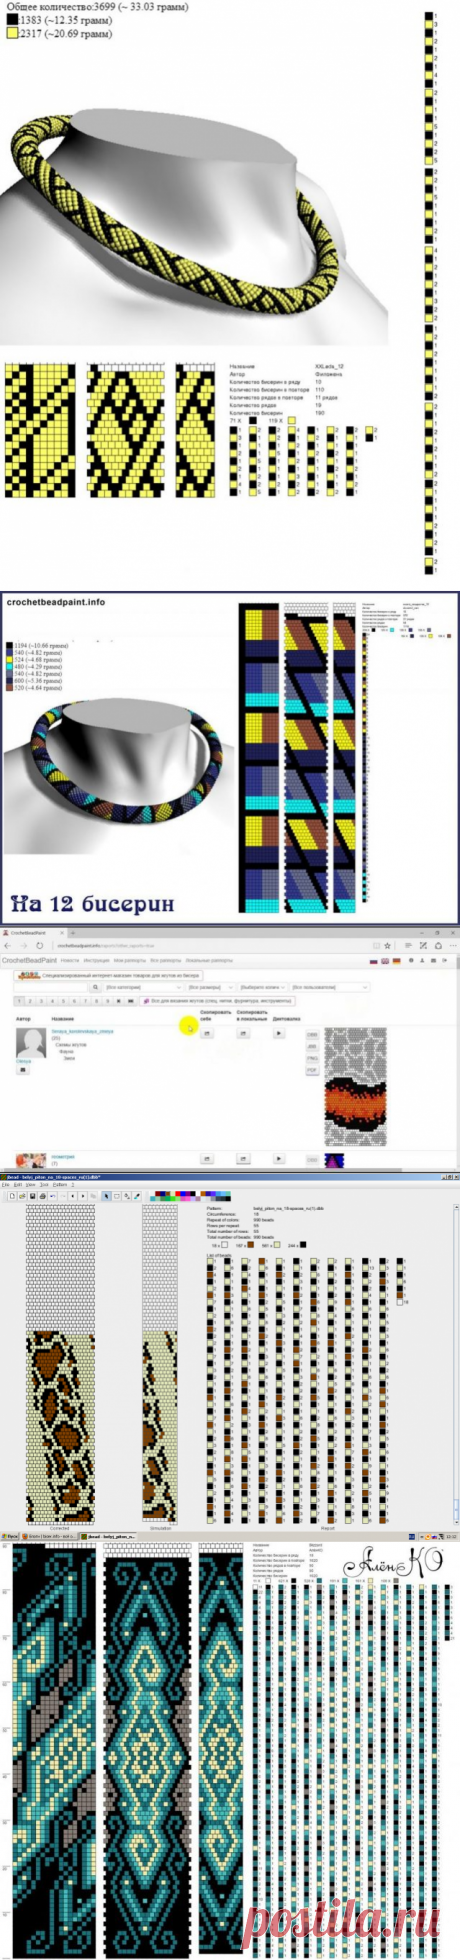 CrochetBeadPaint: создание схемы жгутов| Domigolki.ru